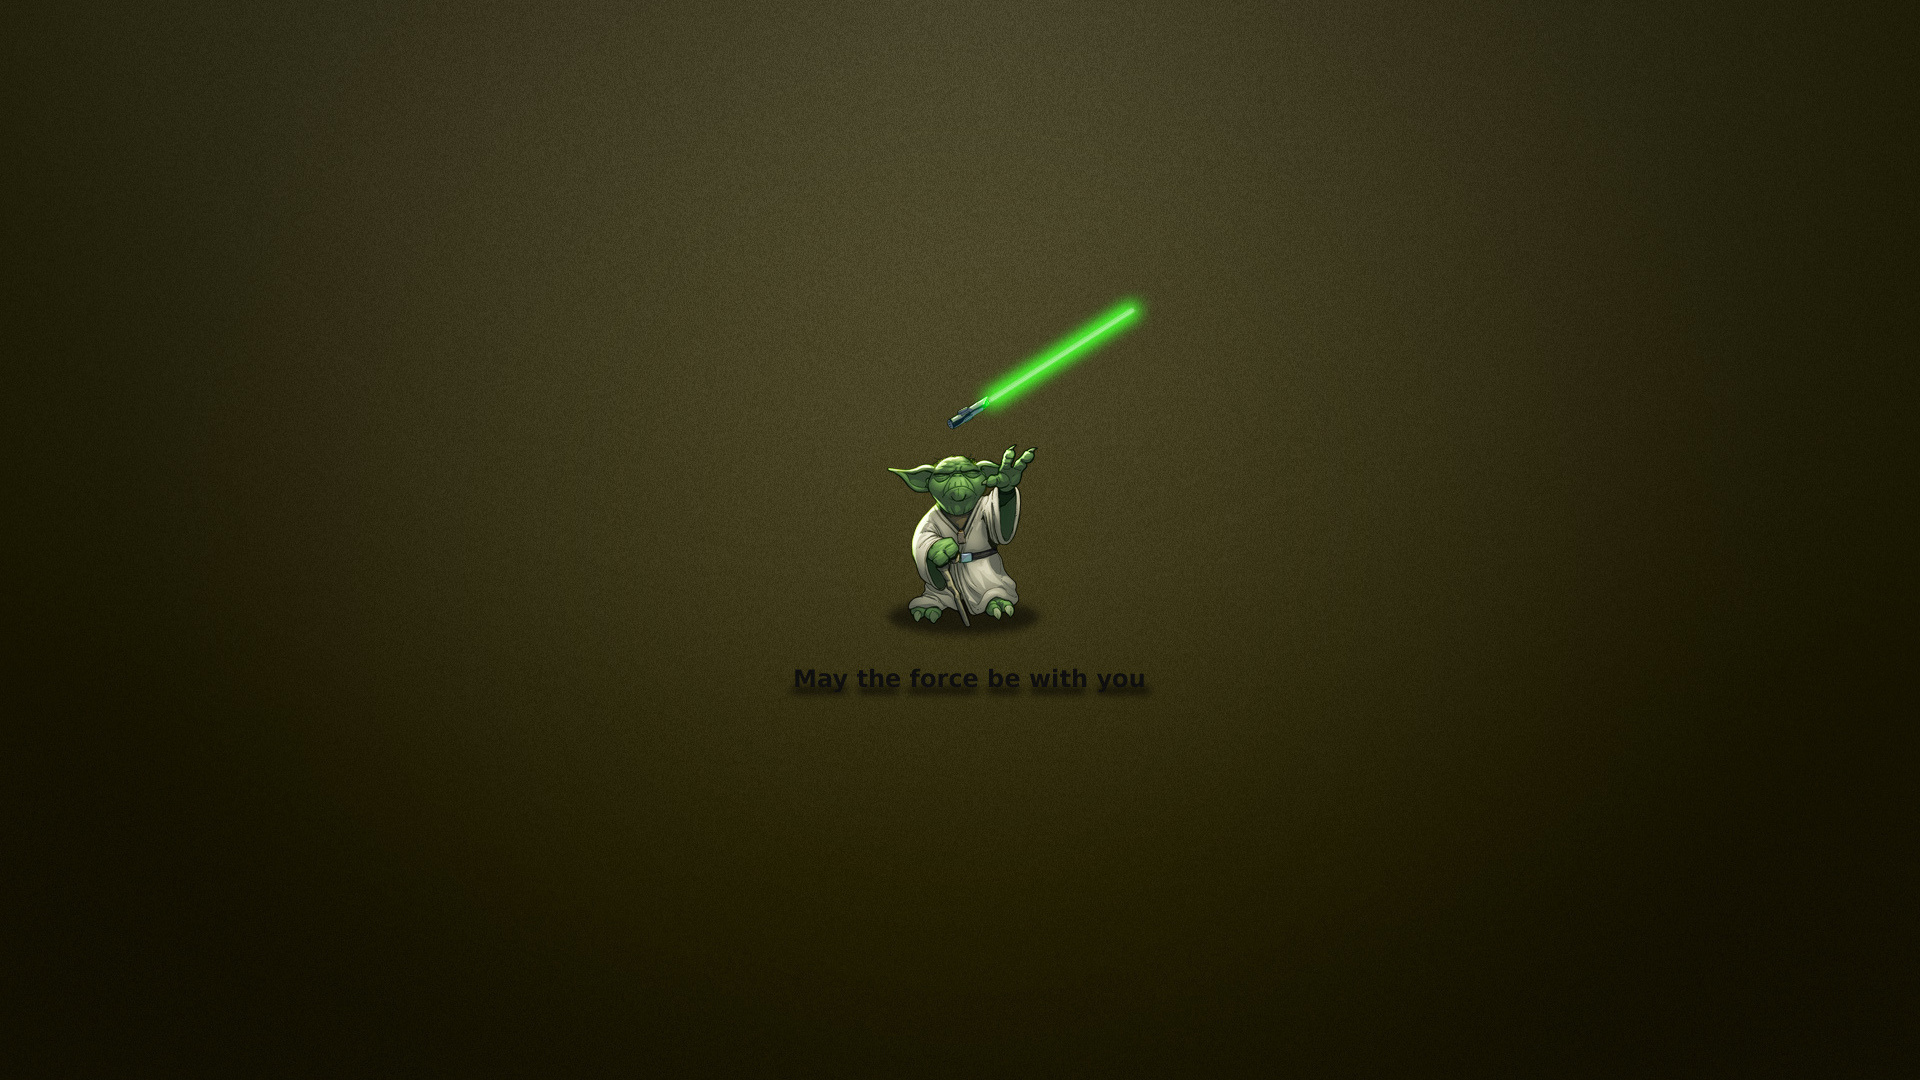 Wallpaper Star Wars Jedi Yoda Minimalism Widescreen On